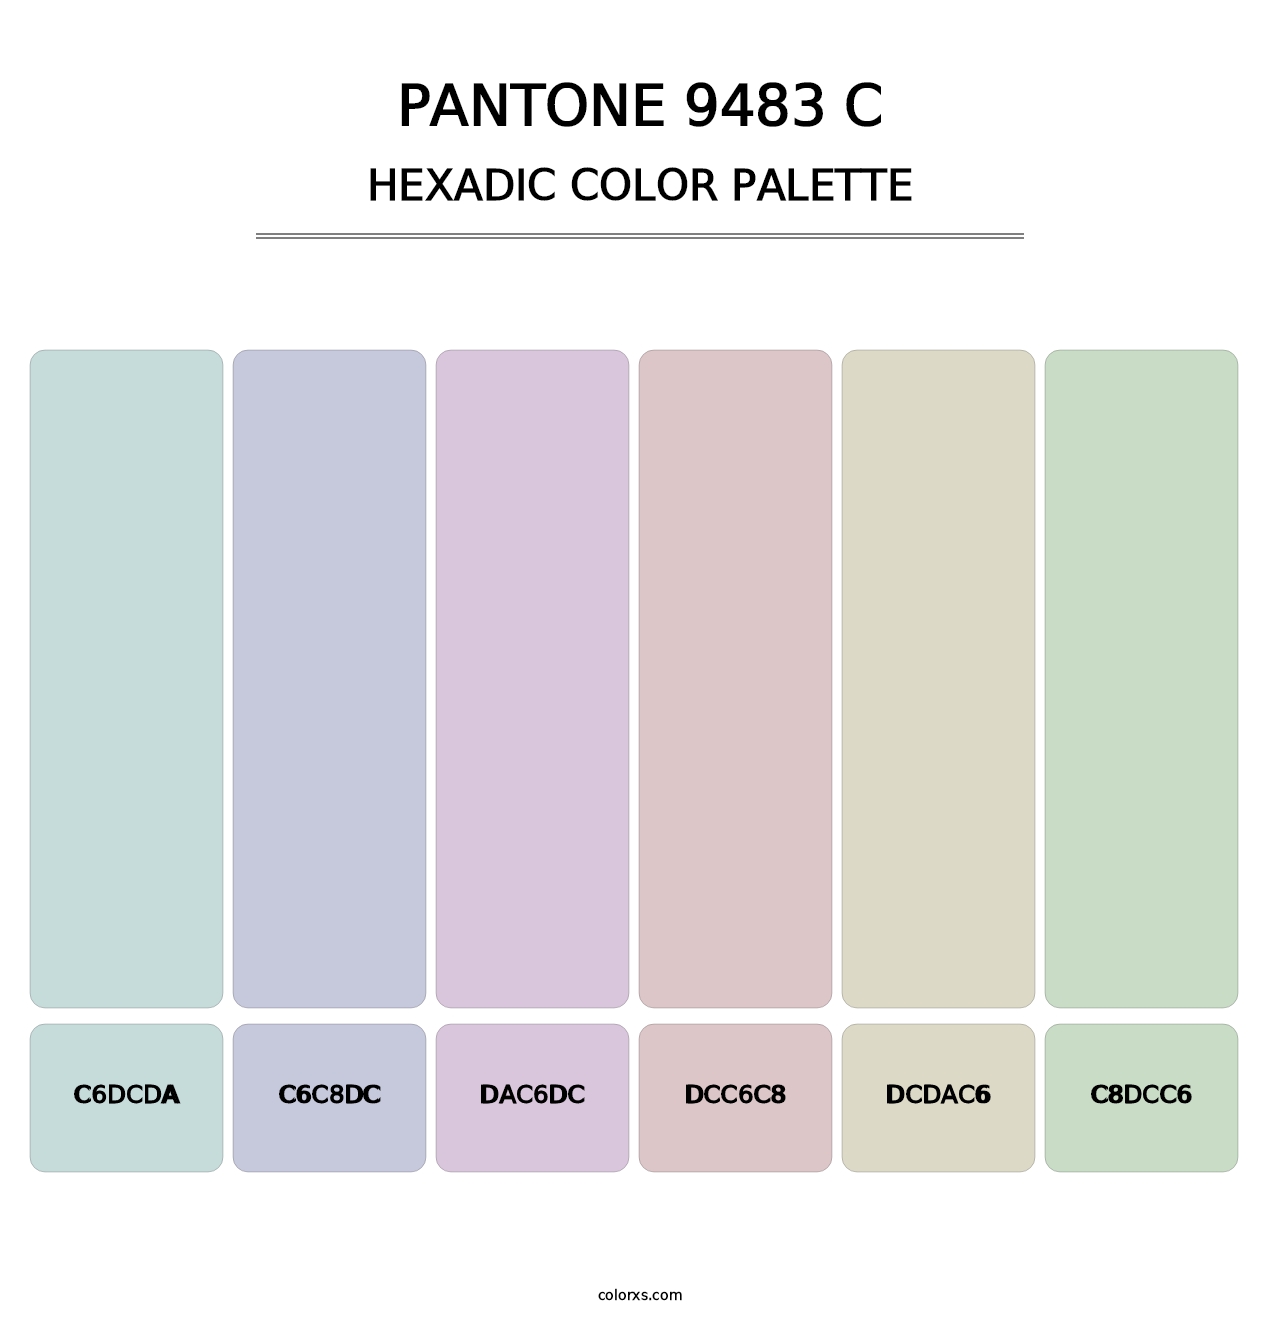 PANTONE 9483 C - Hexadic Color Palette